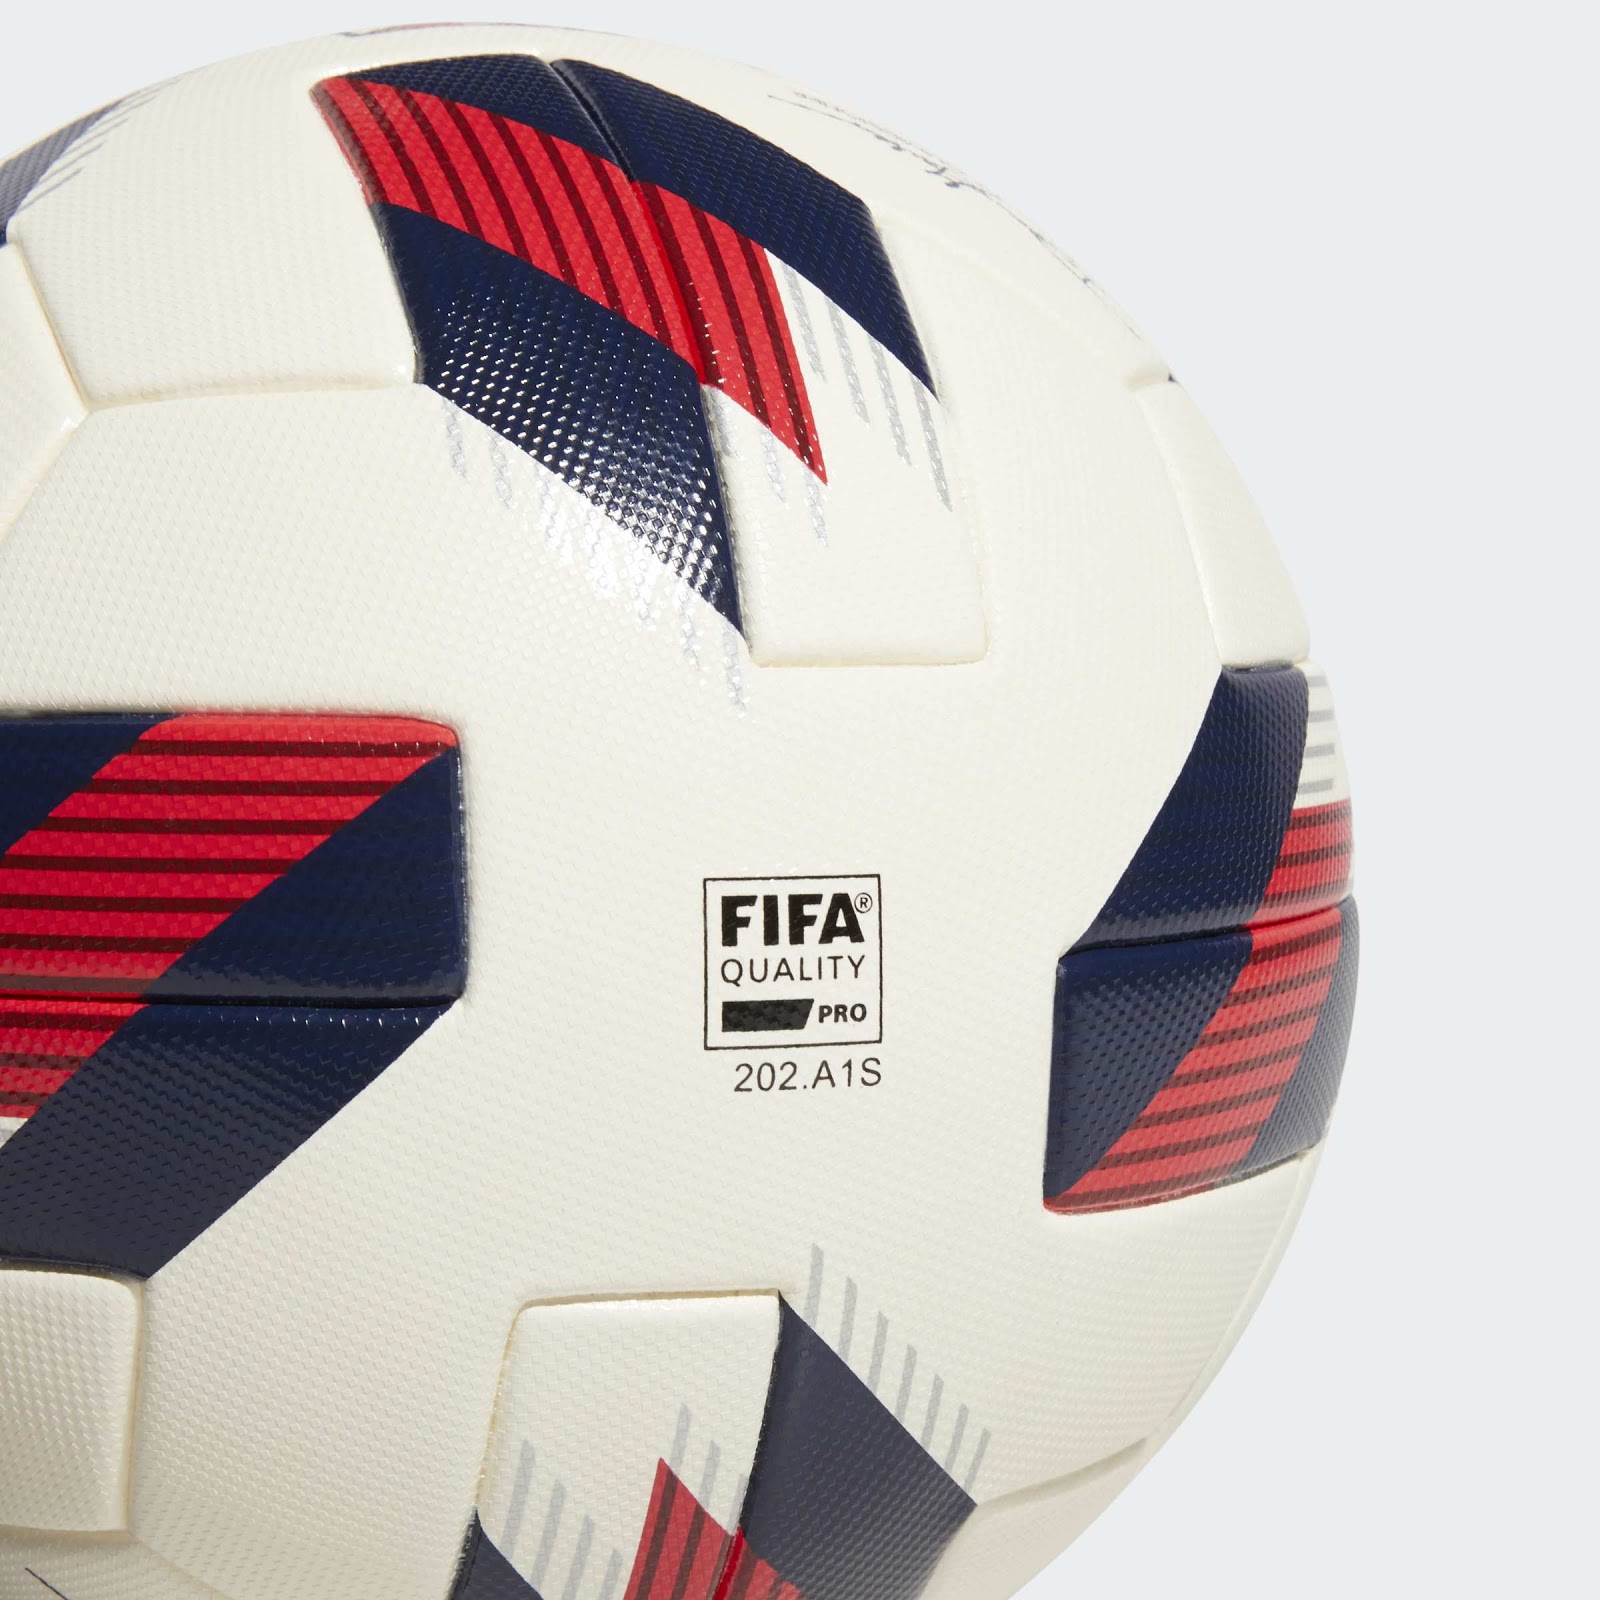 Fifa quality pro. Мяч футбольный МЛС adidas MLS Pro 2018. Мяч adidas FIFA quality Pro 202.a1p. Puma MLS Official Match Ball. Мяч адидас красно белый.